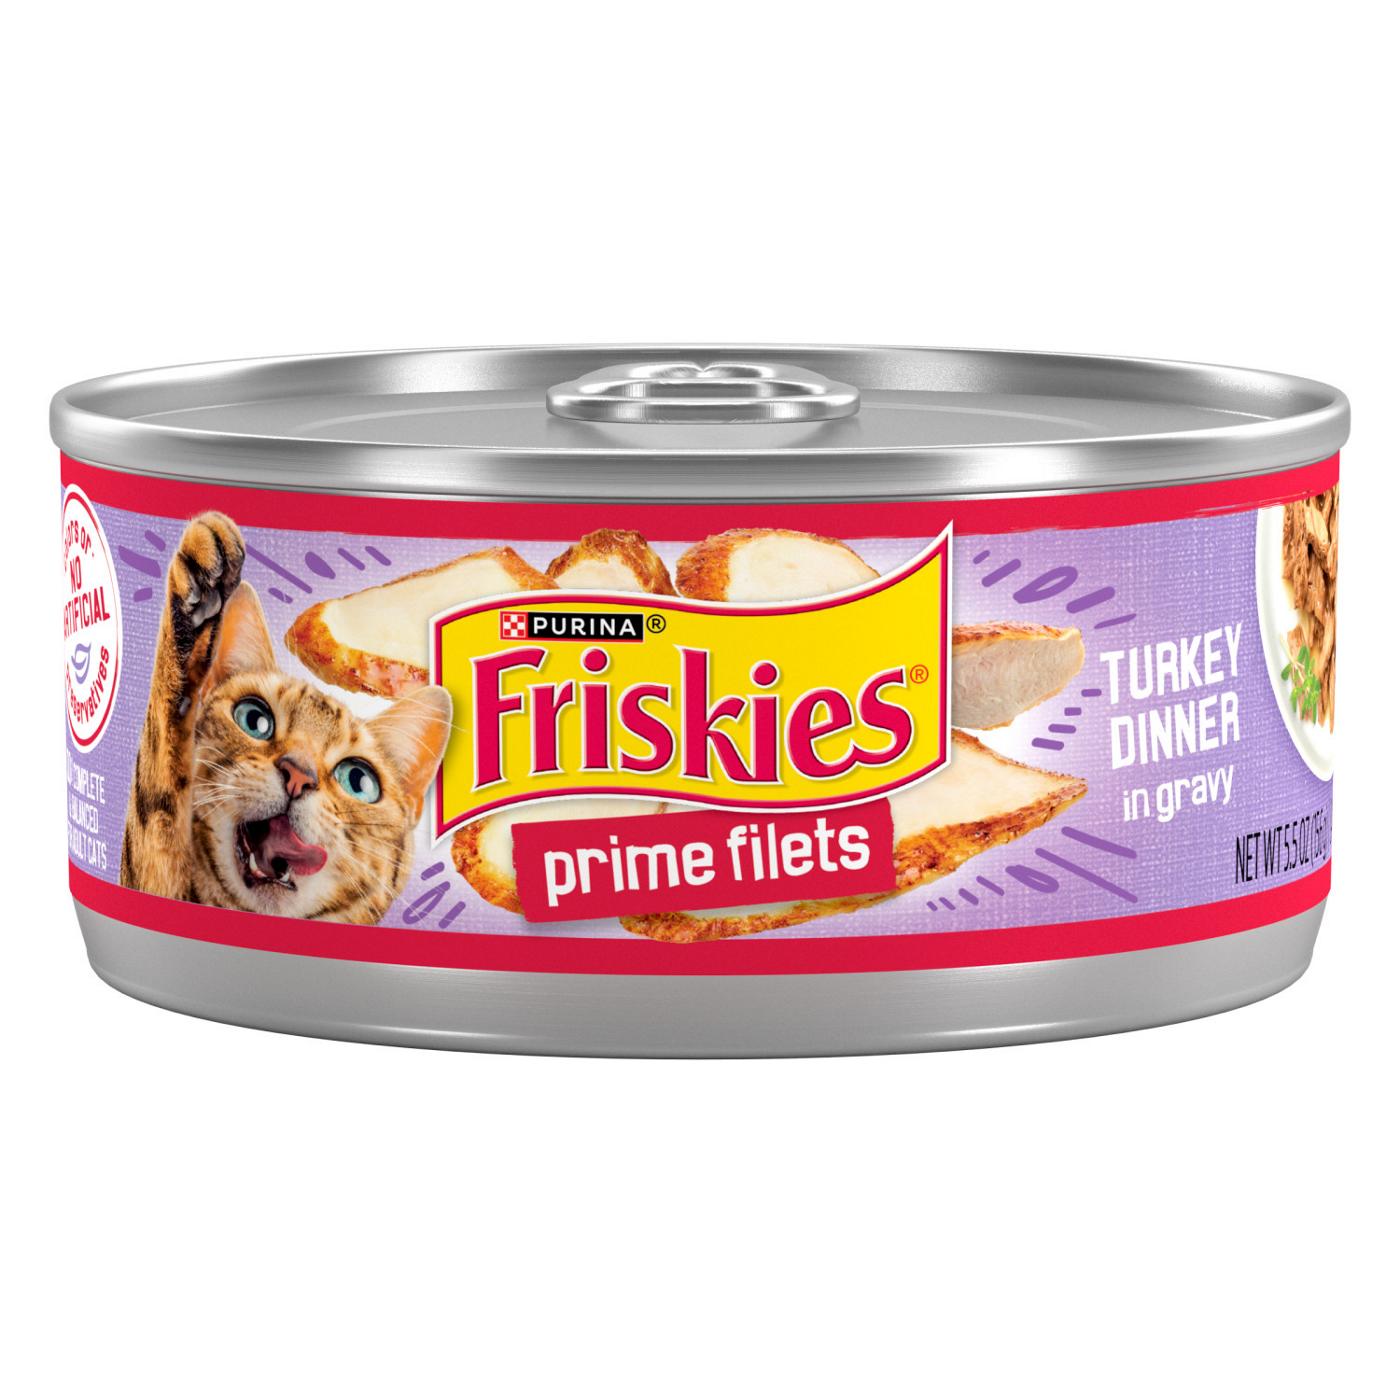 Friskies Purina Friskies Gravy Wet Cat Food, Prime Filets Turkey Dinner; image 1 of 9